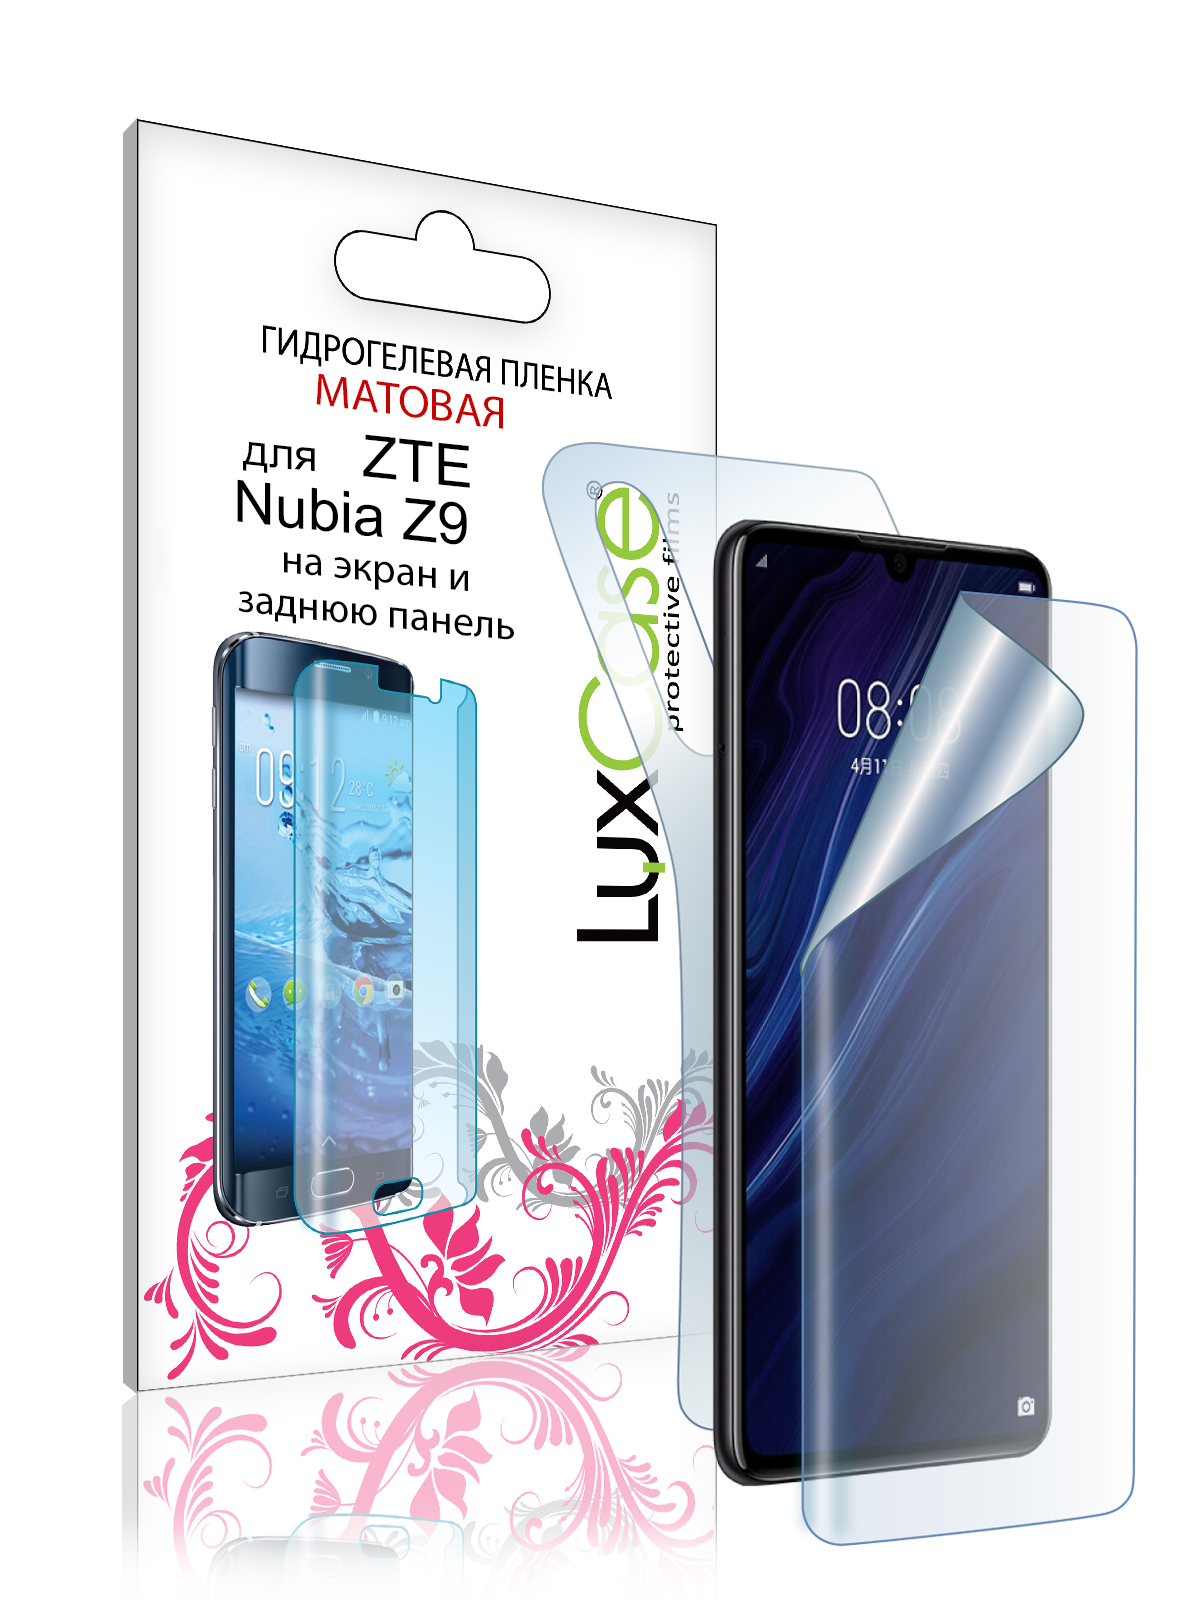 Гидрогелевая пленка LuxCase для ZTE Nubia Z9 0.14mm Matte Front and Back Transparent 87673 защитная гидрогелевая пленка для zte nubia z9 на экран матовая